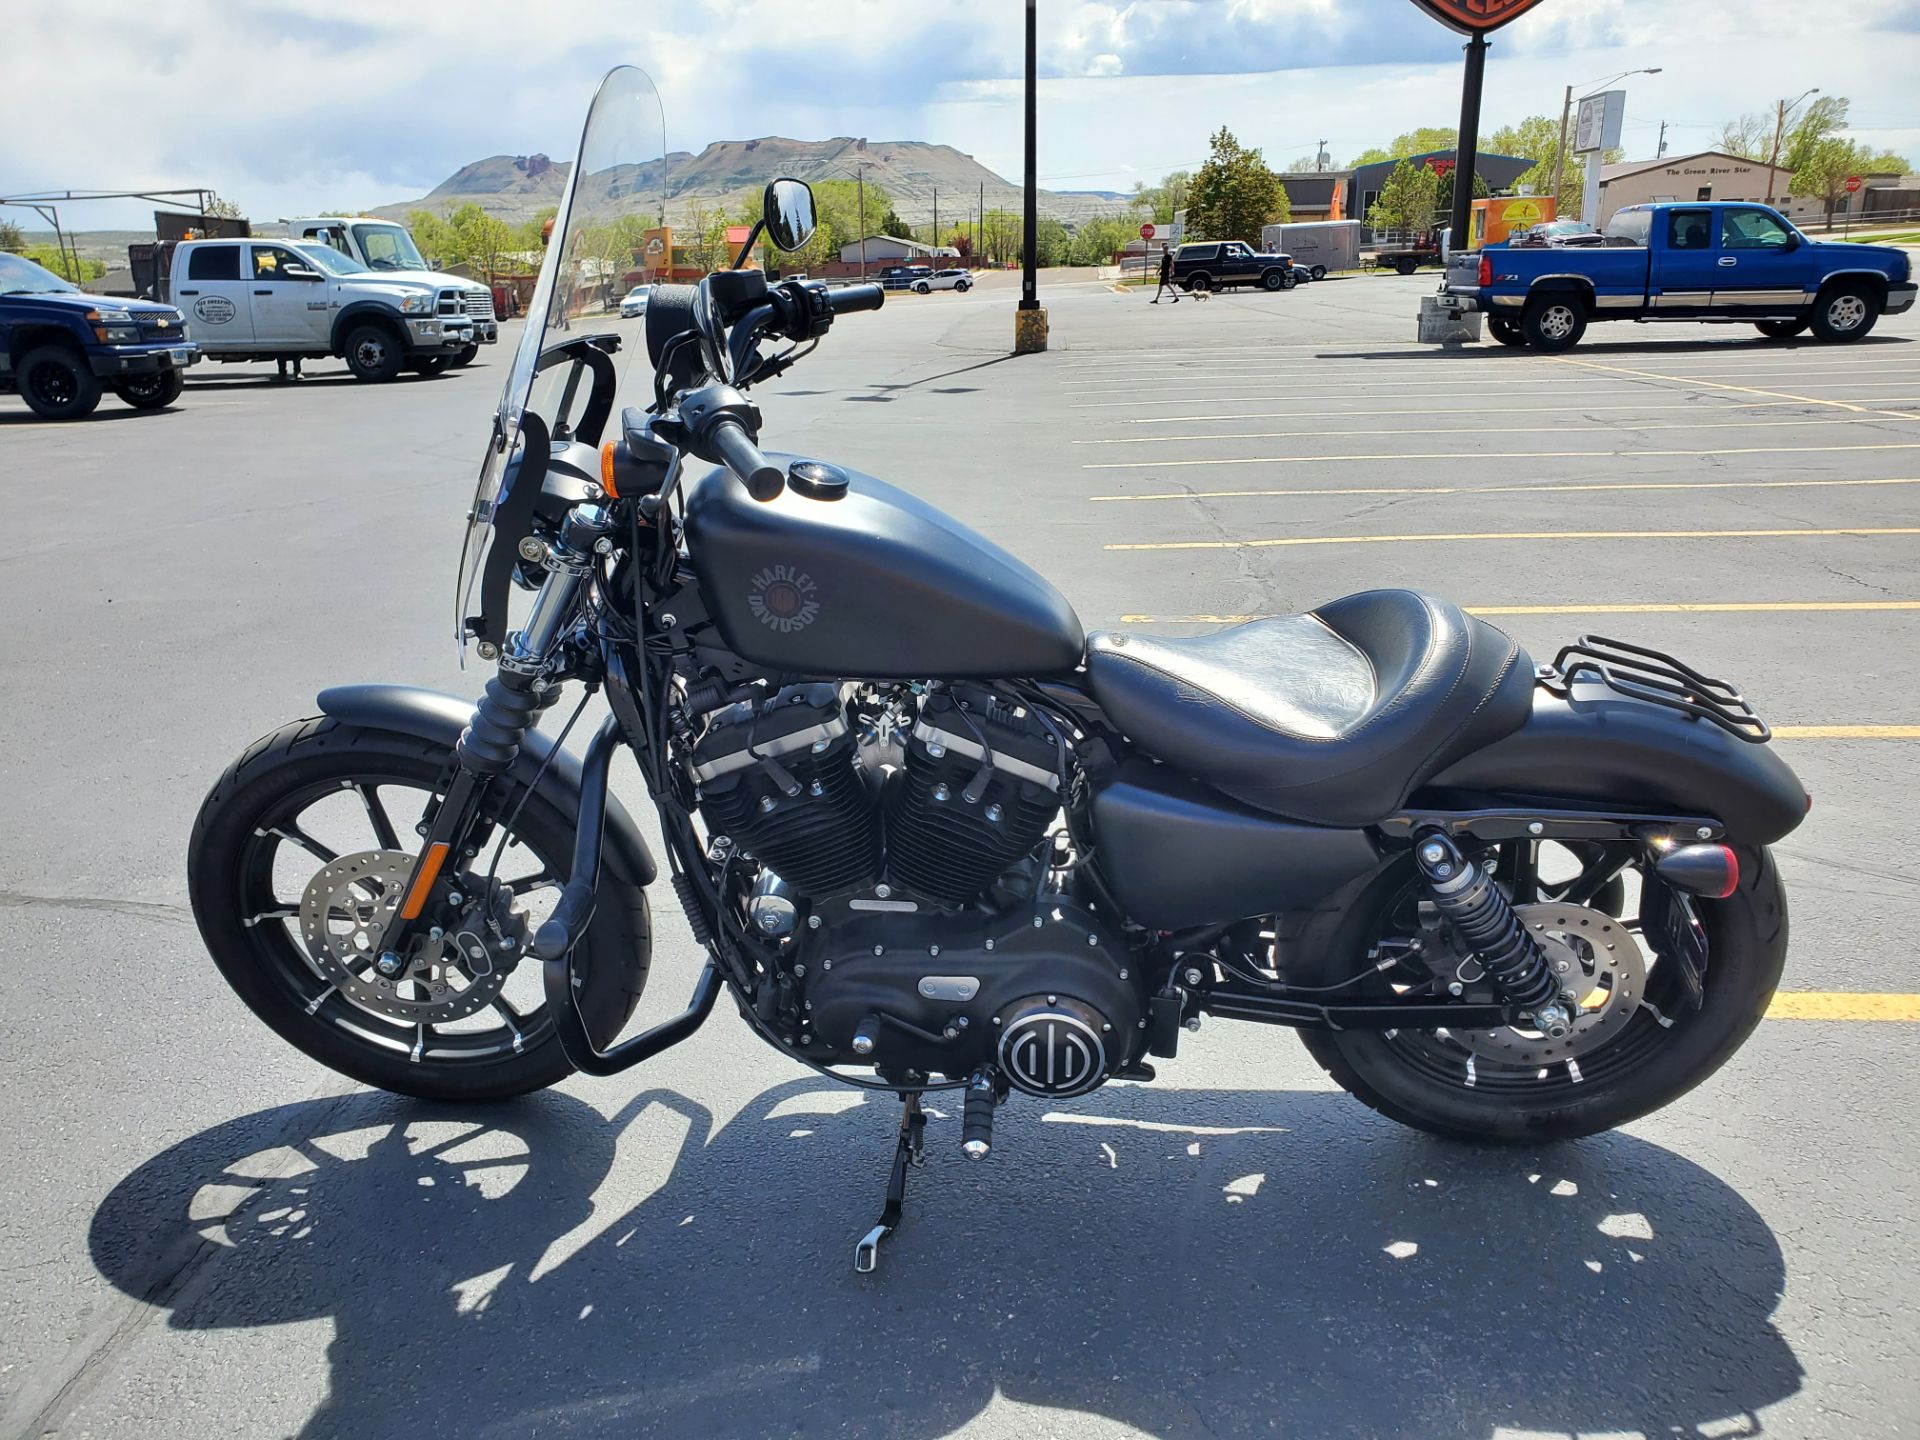 2020 Harley-Davidson Iron 883™ in Green River, Wyoming - Photo 5